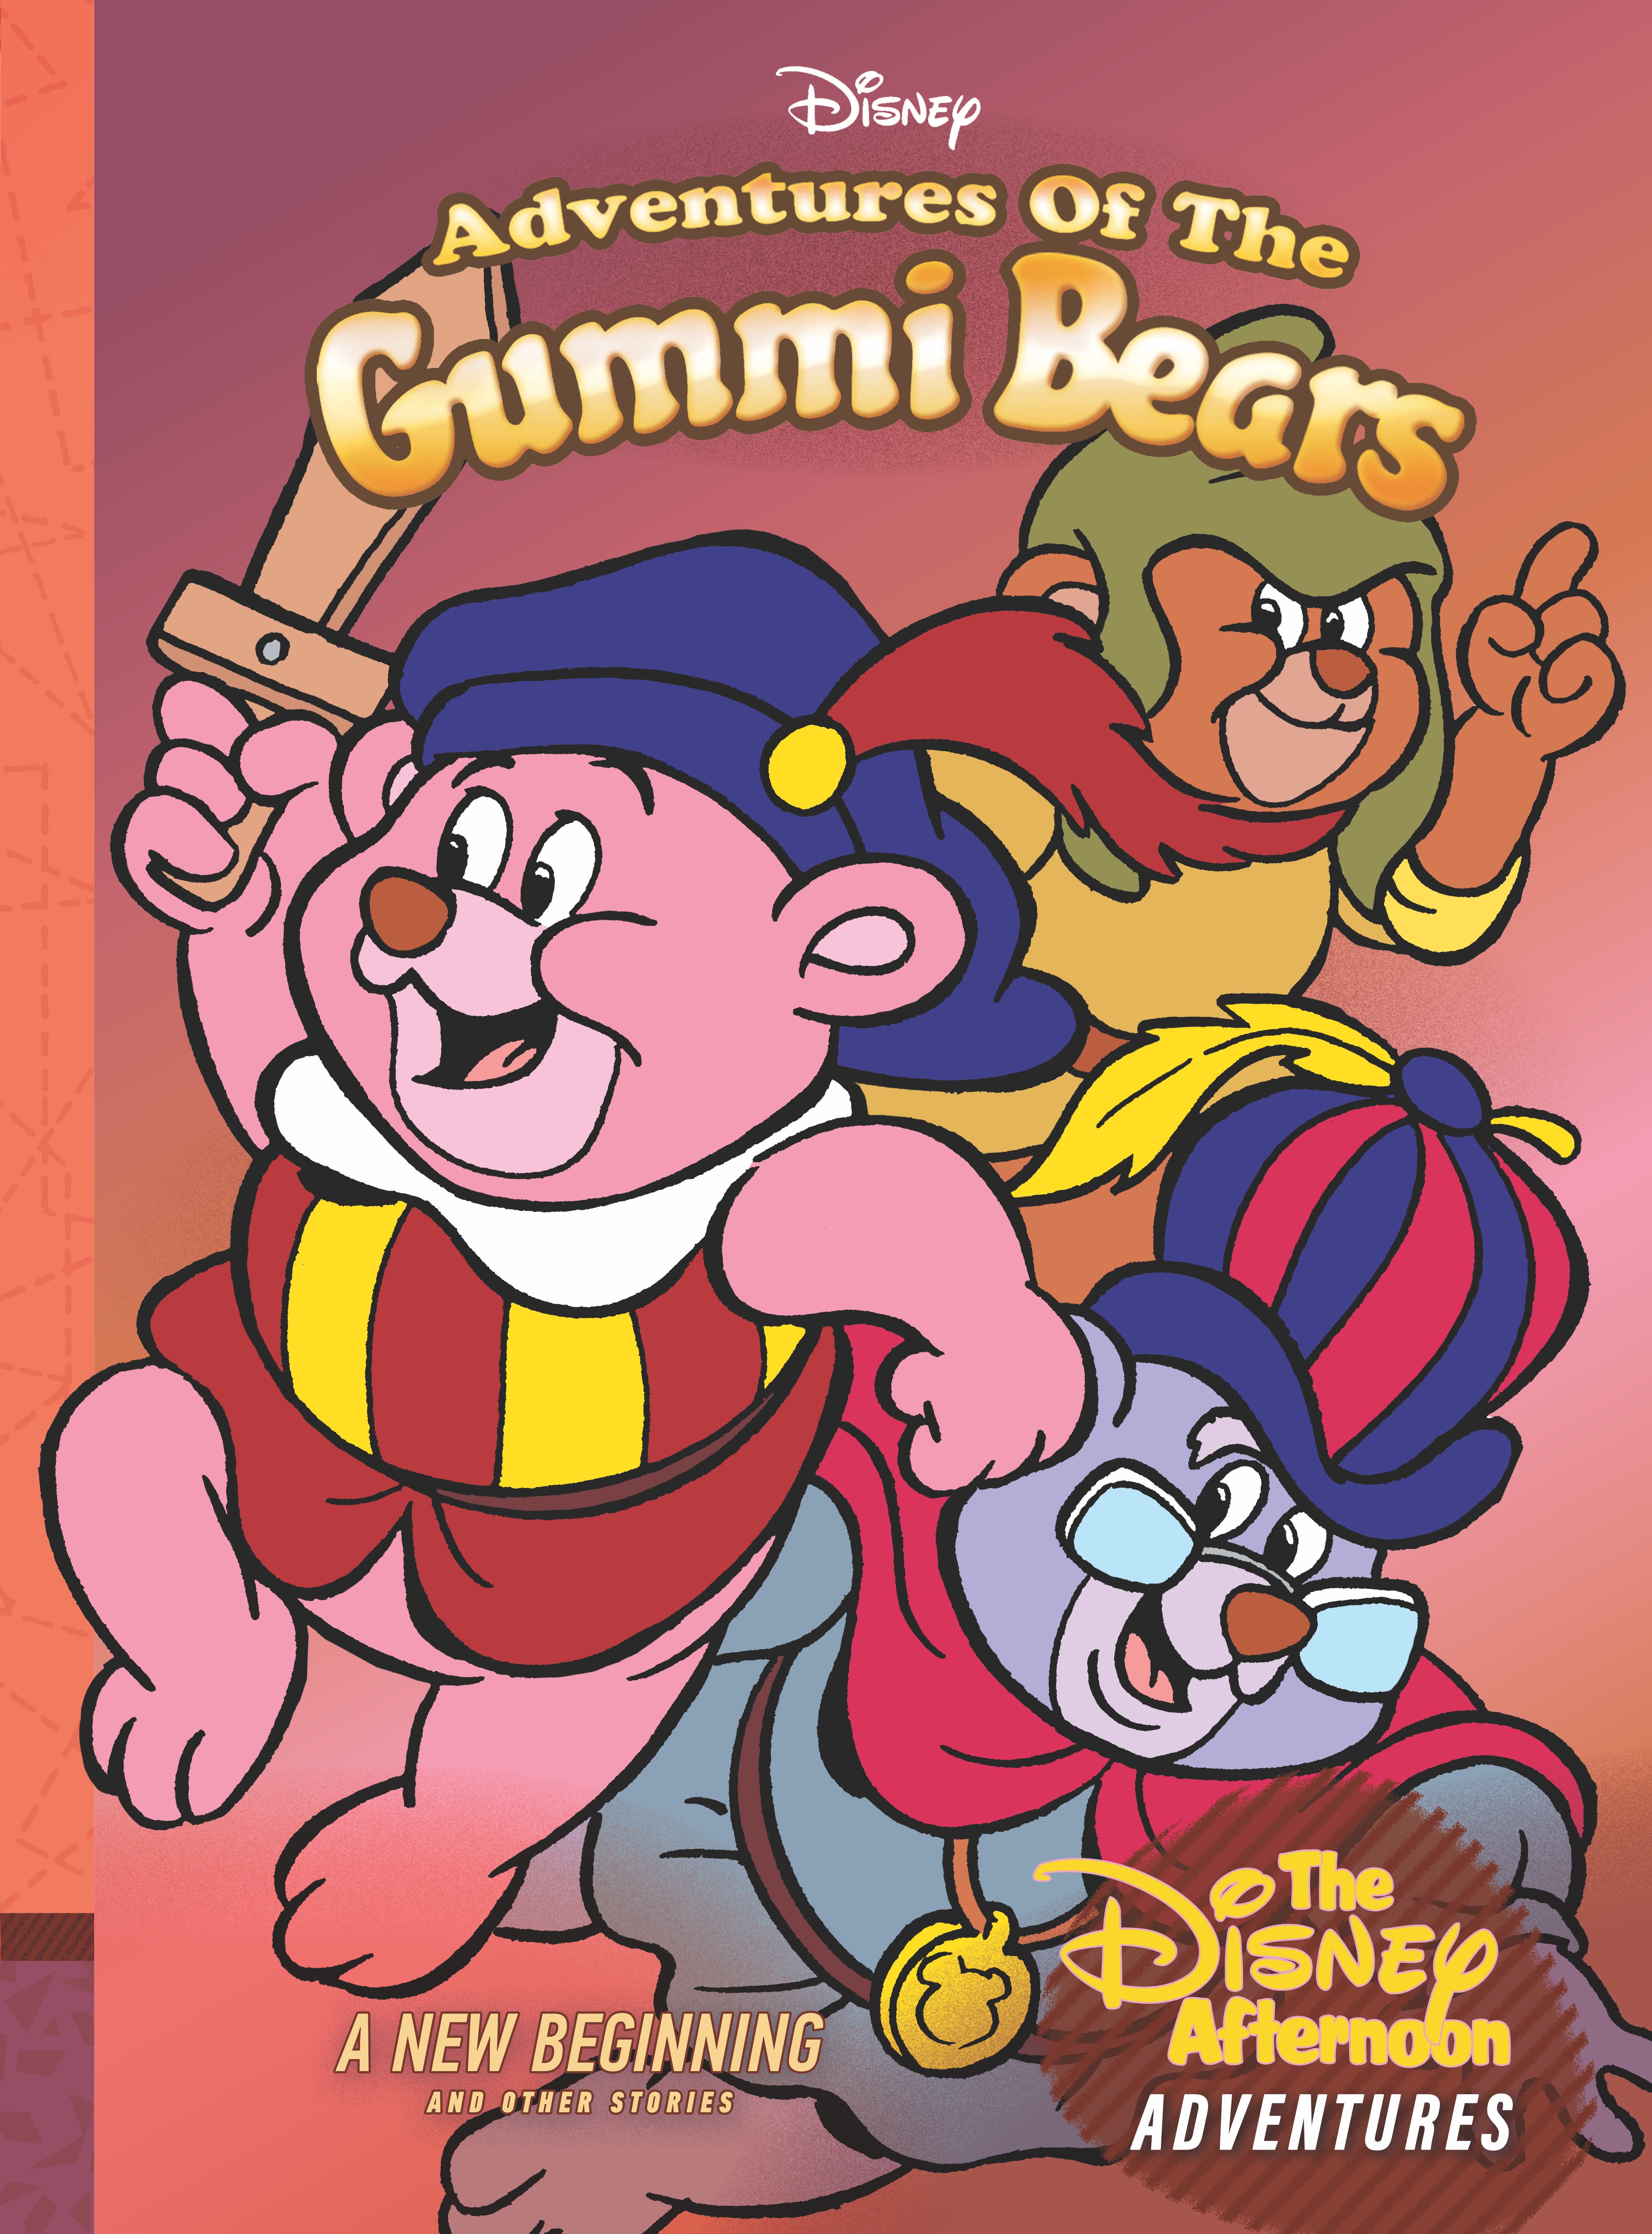 Disney Afternoon Adventures Hardcover Volume 4 Adventures of the Gummi Bears A New Beginning